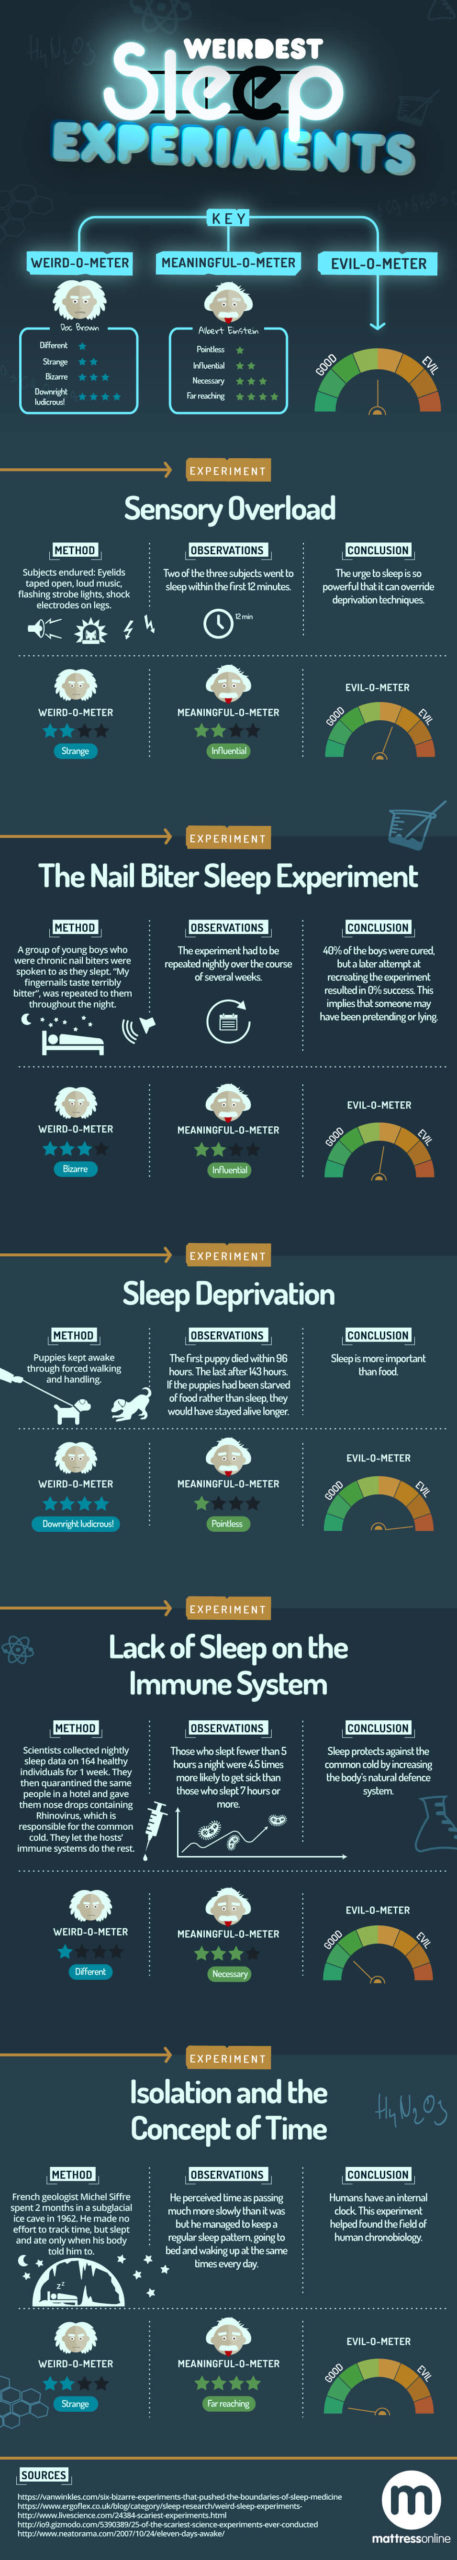 INSIGHTS ON THE IMPORTANCE OF SLEEP: BIZARRE SLEEP EXPERIMENTS